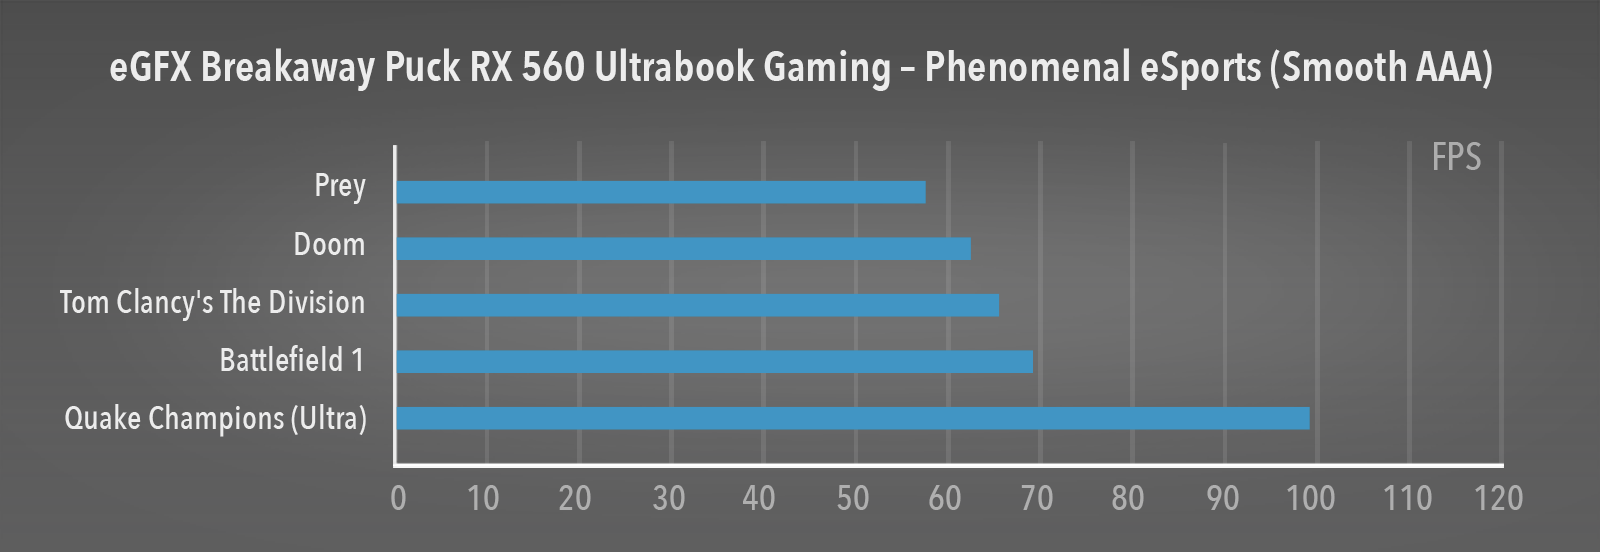 Windows Ultrabook Gaming Performance Charts